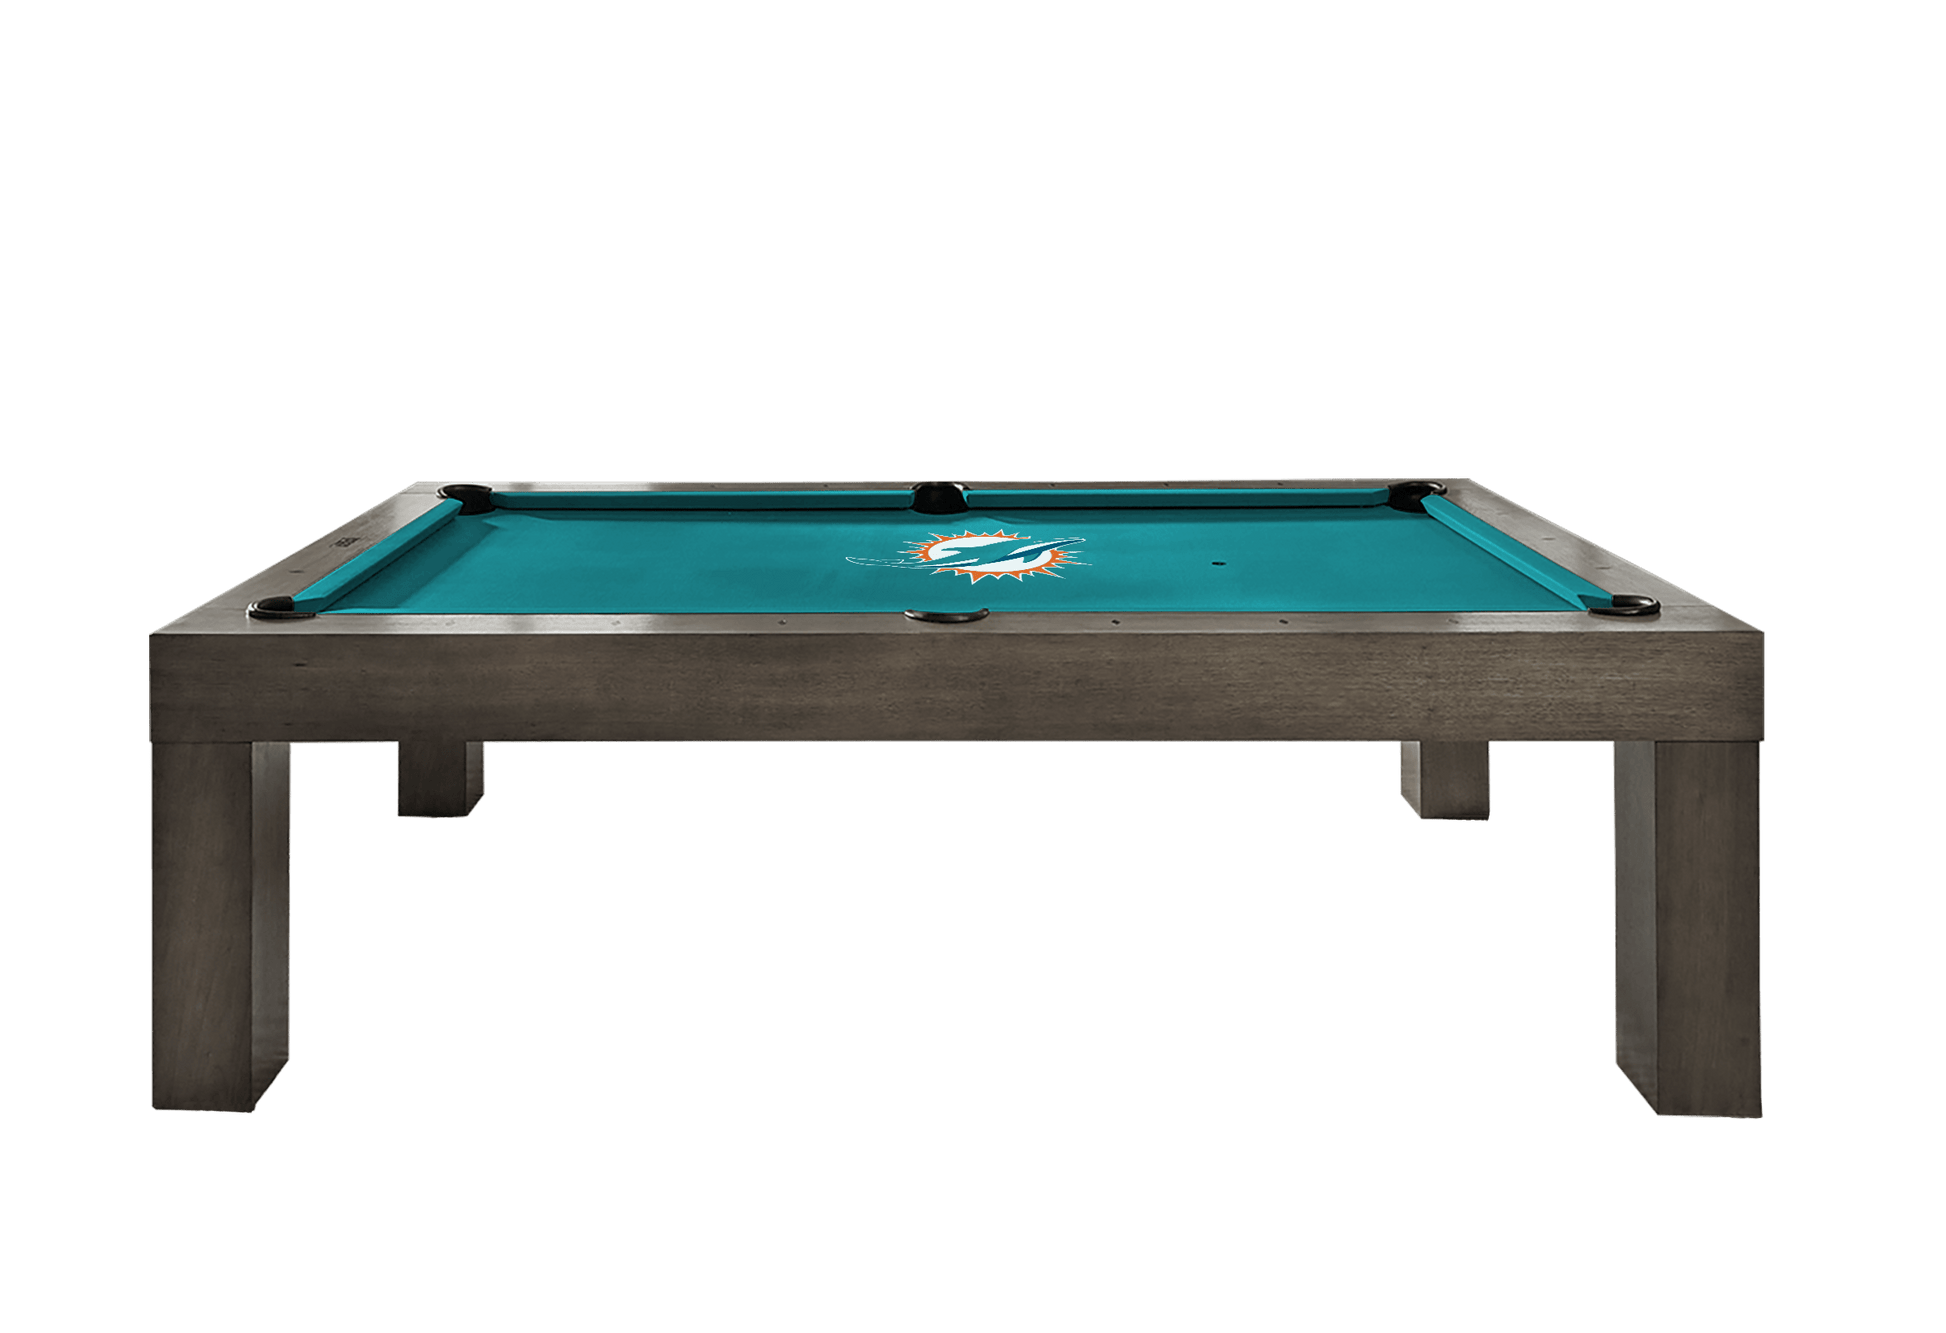 Miami Dolphins Premium Pool Table Bundle - Charcoal Pool Bundle Home Arcade Games   